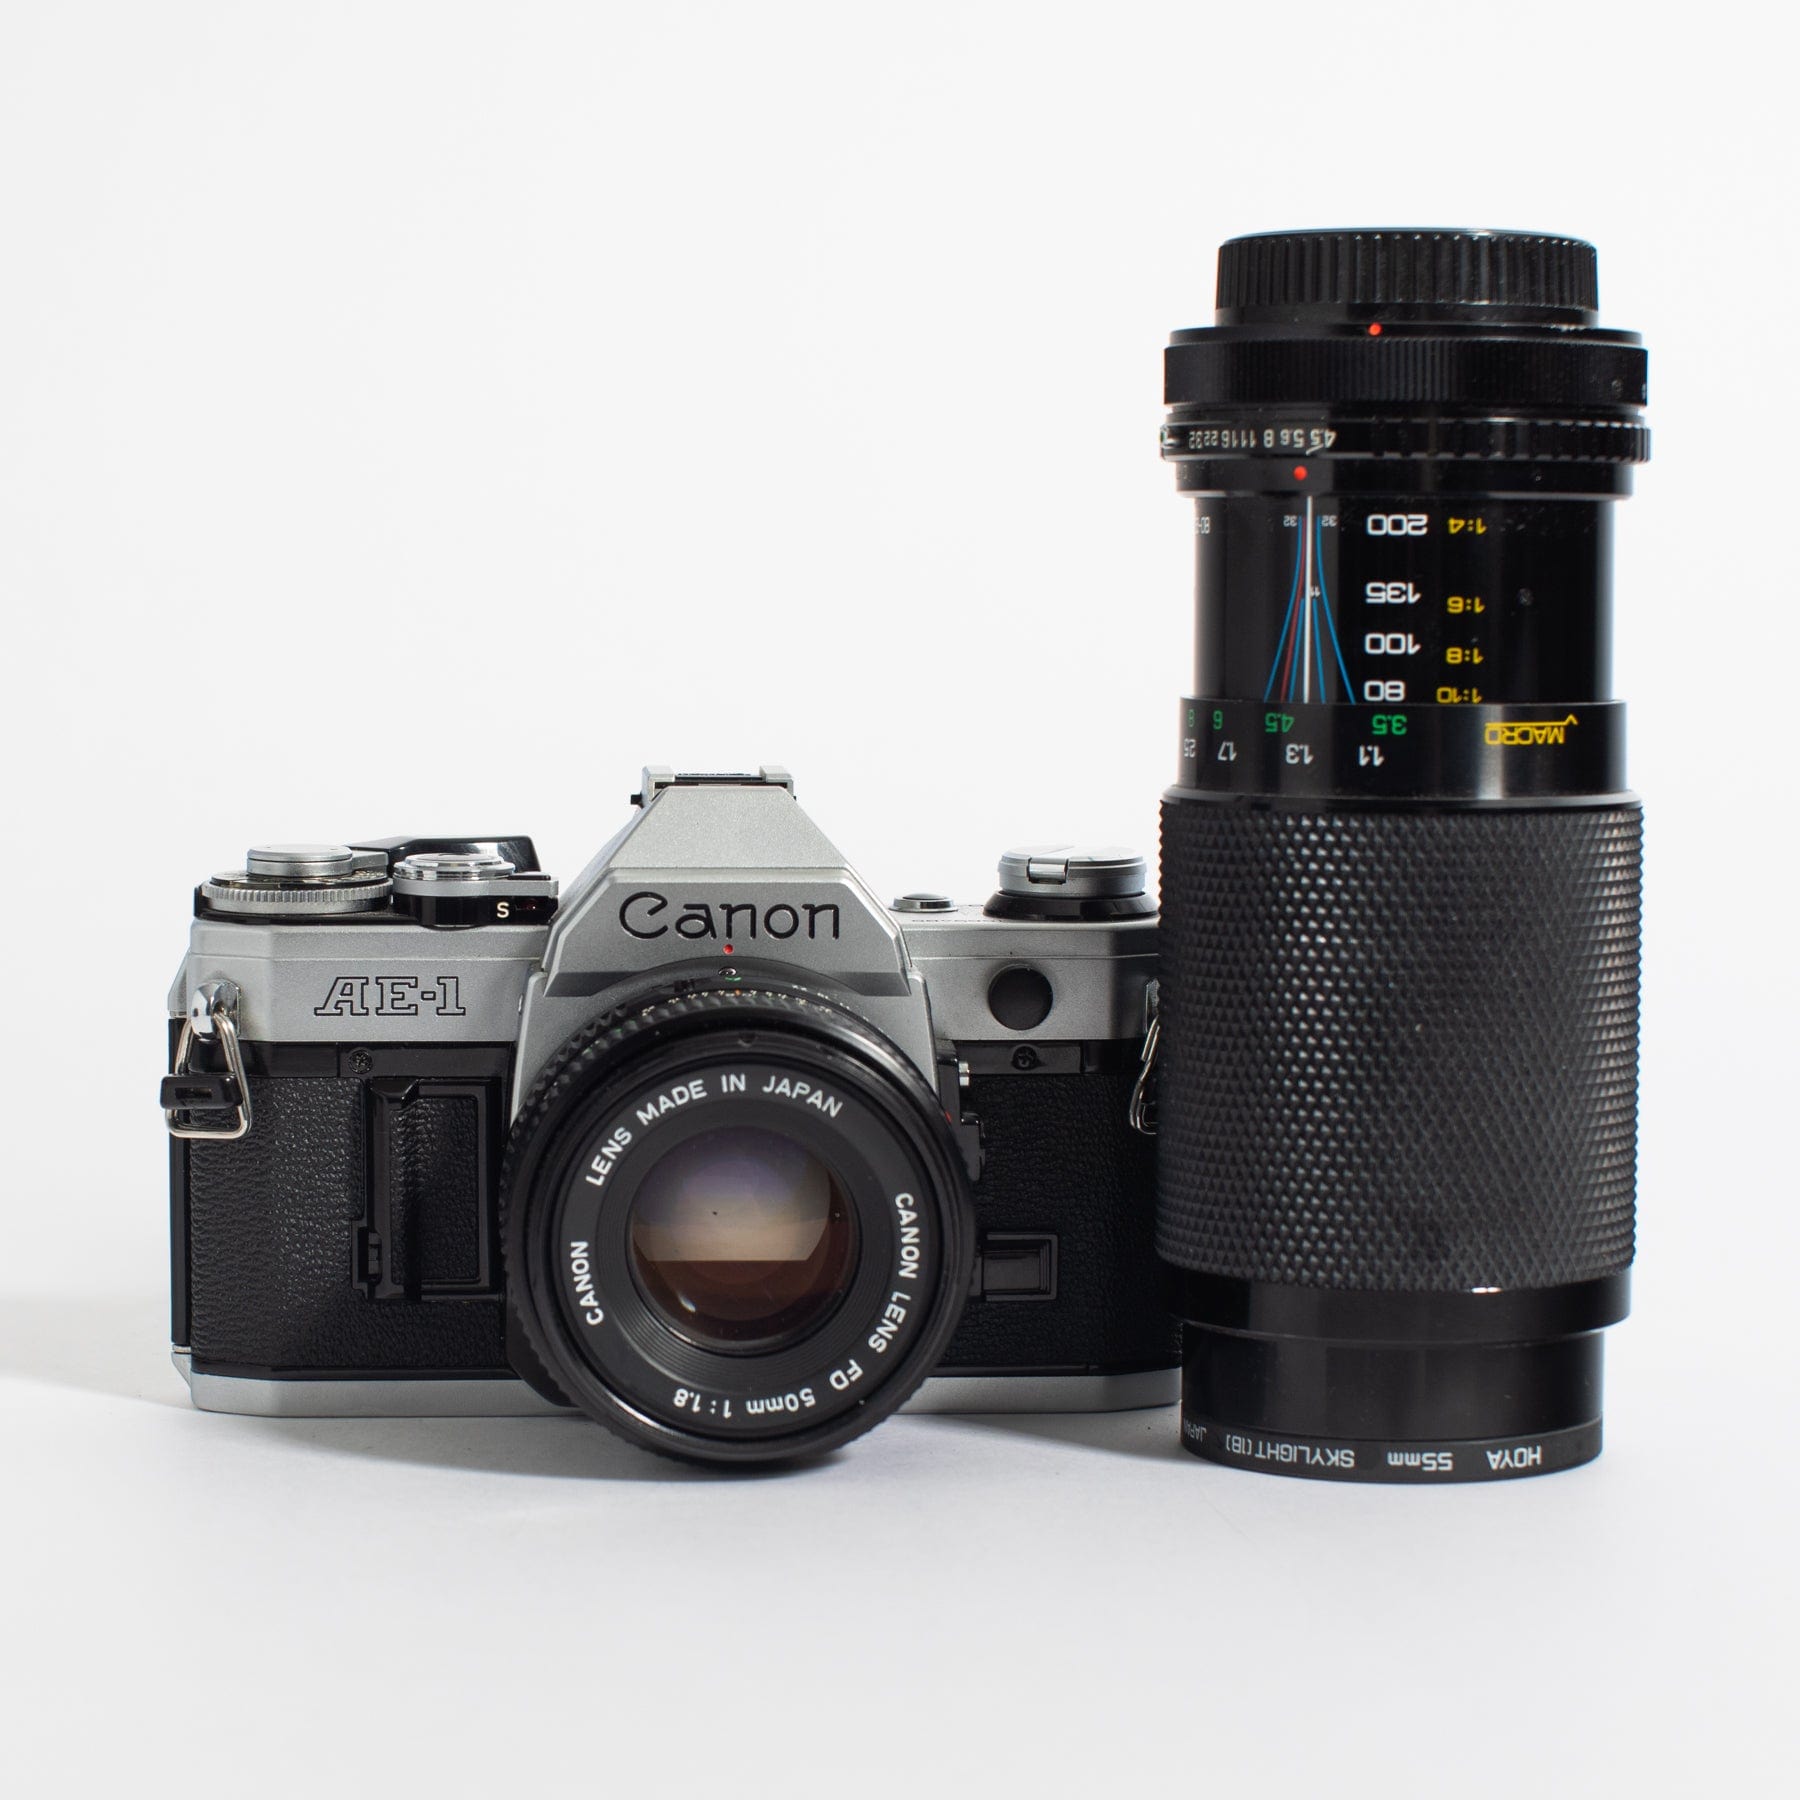 Canon AE-1 w/ 50mm FD f/1.8 and bonus telephoto zoom lens, body no 